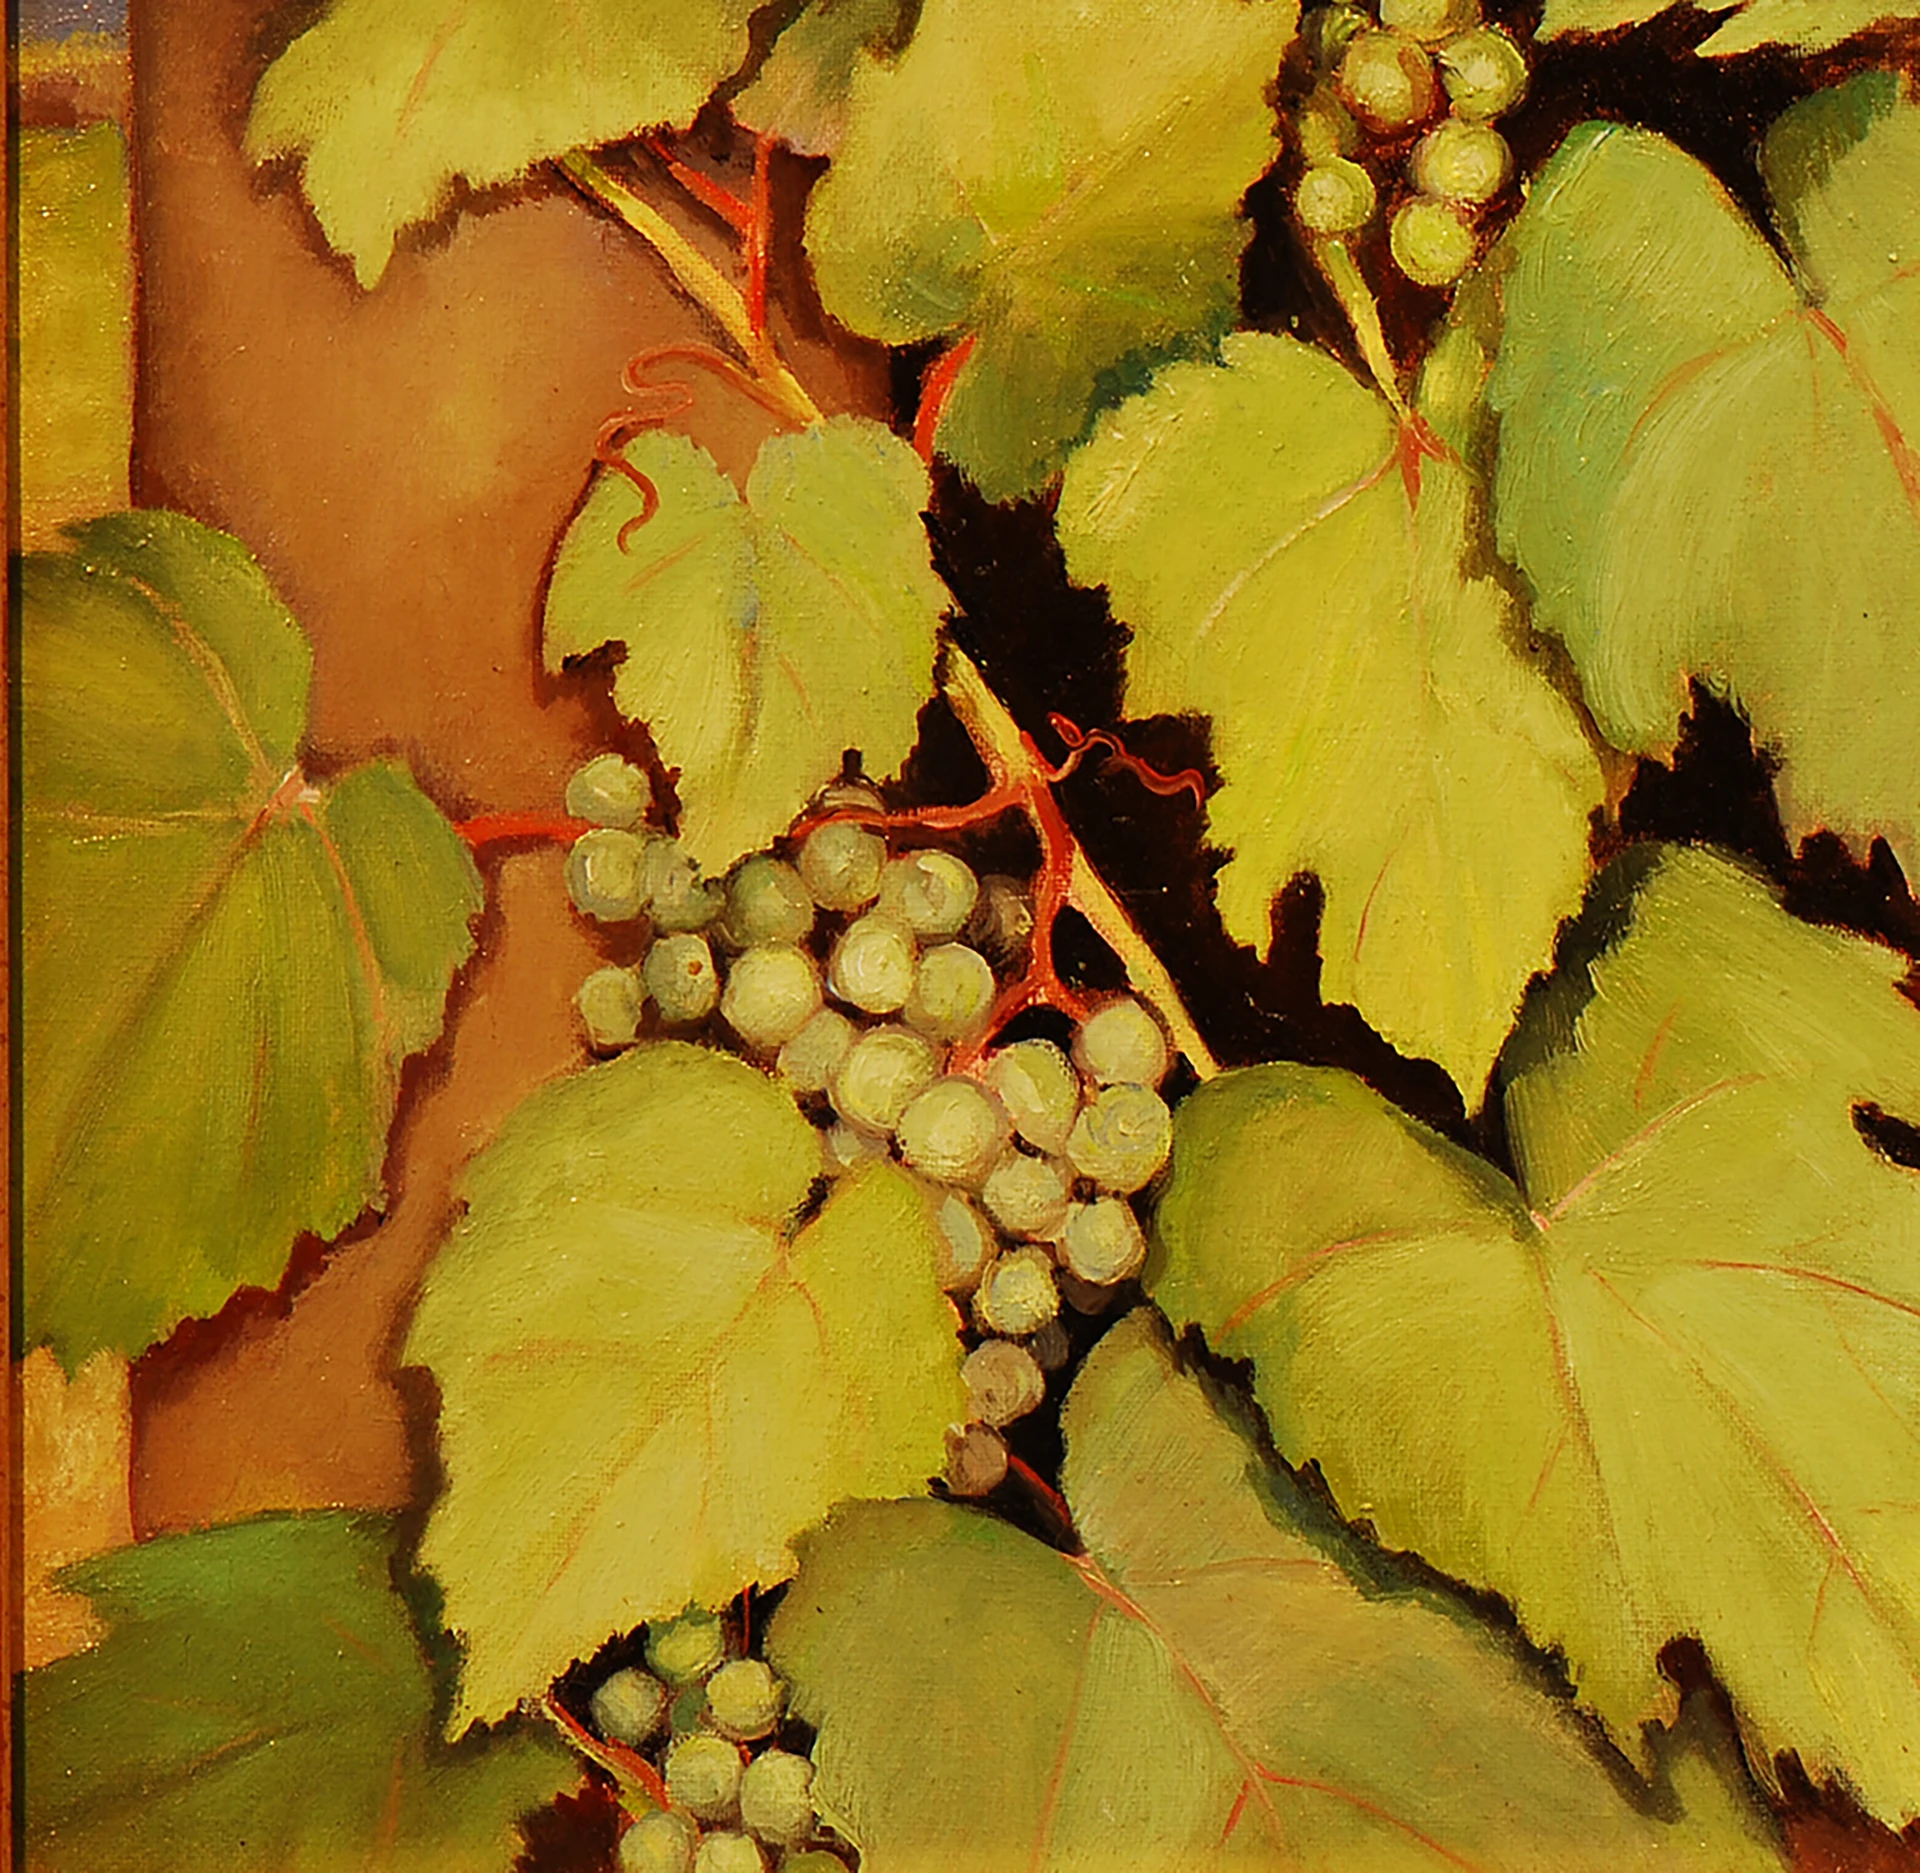 Grapes in June, Fleur Palau, oil on canvas 10 x 10